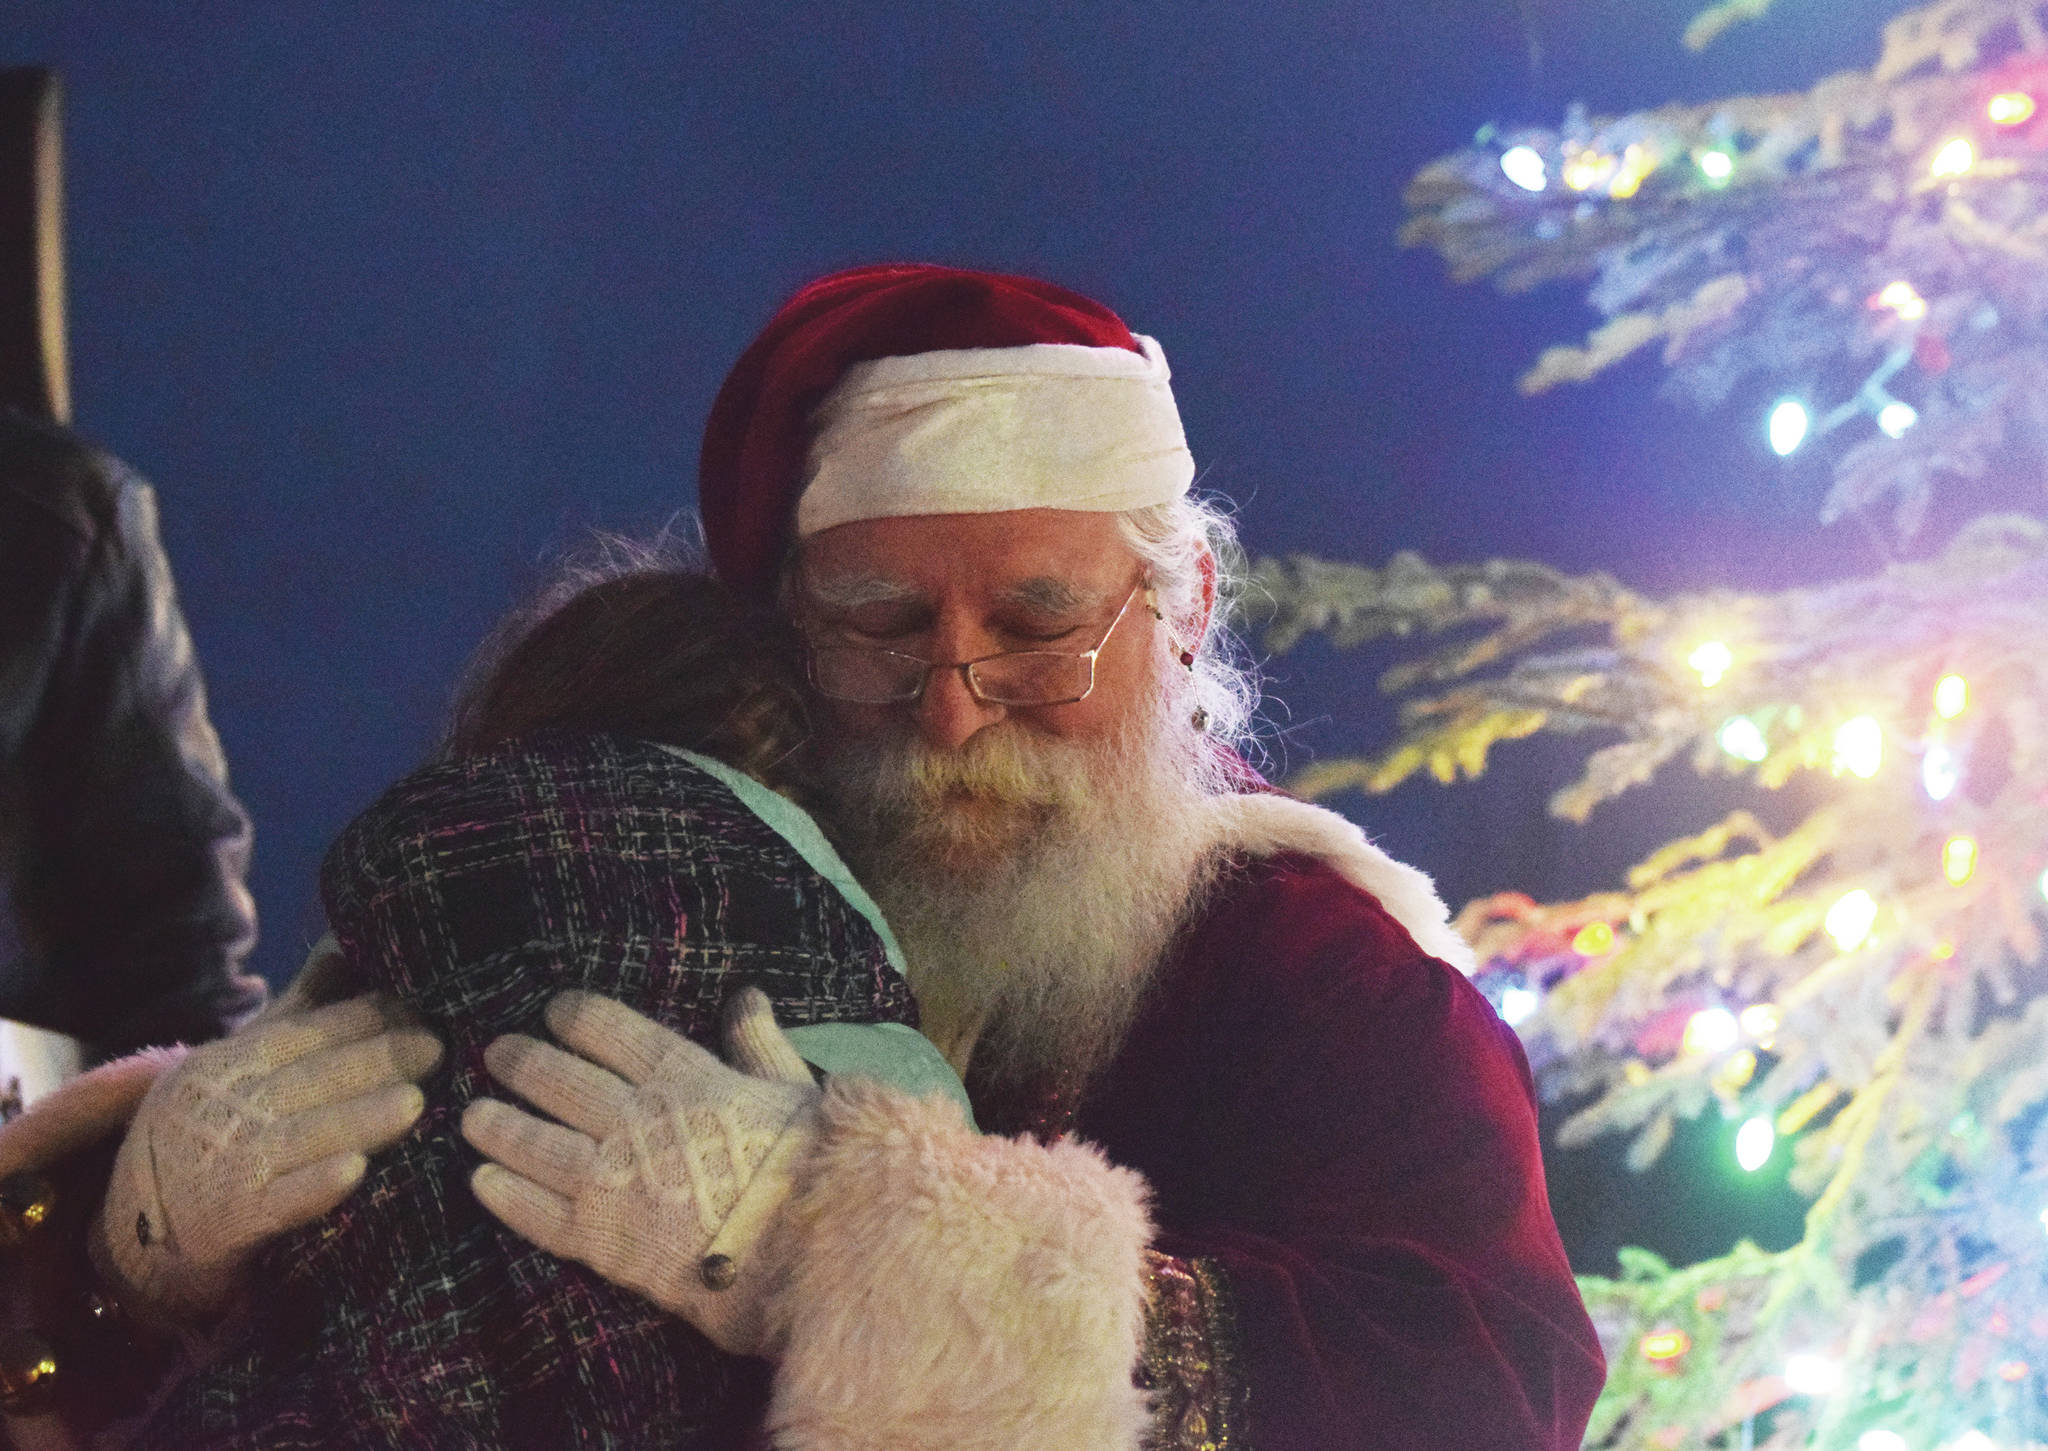 Santa Claus gives a young girl a hug Saturday, Dec. 7, 2019, at the Christmas in the Park celebration at Soldotna Creek Park in Soldotna, Alaska. (Photo by Joey Klecka/Peninsula Clarion)